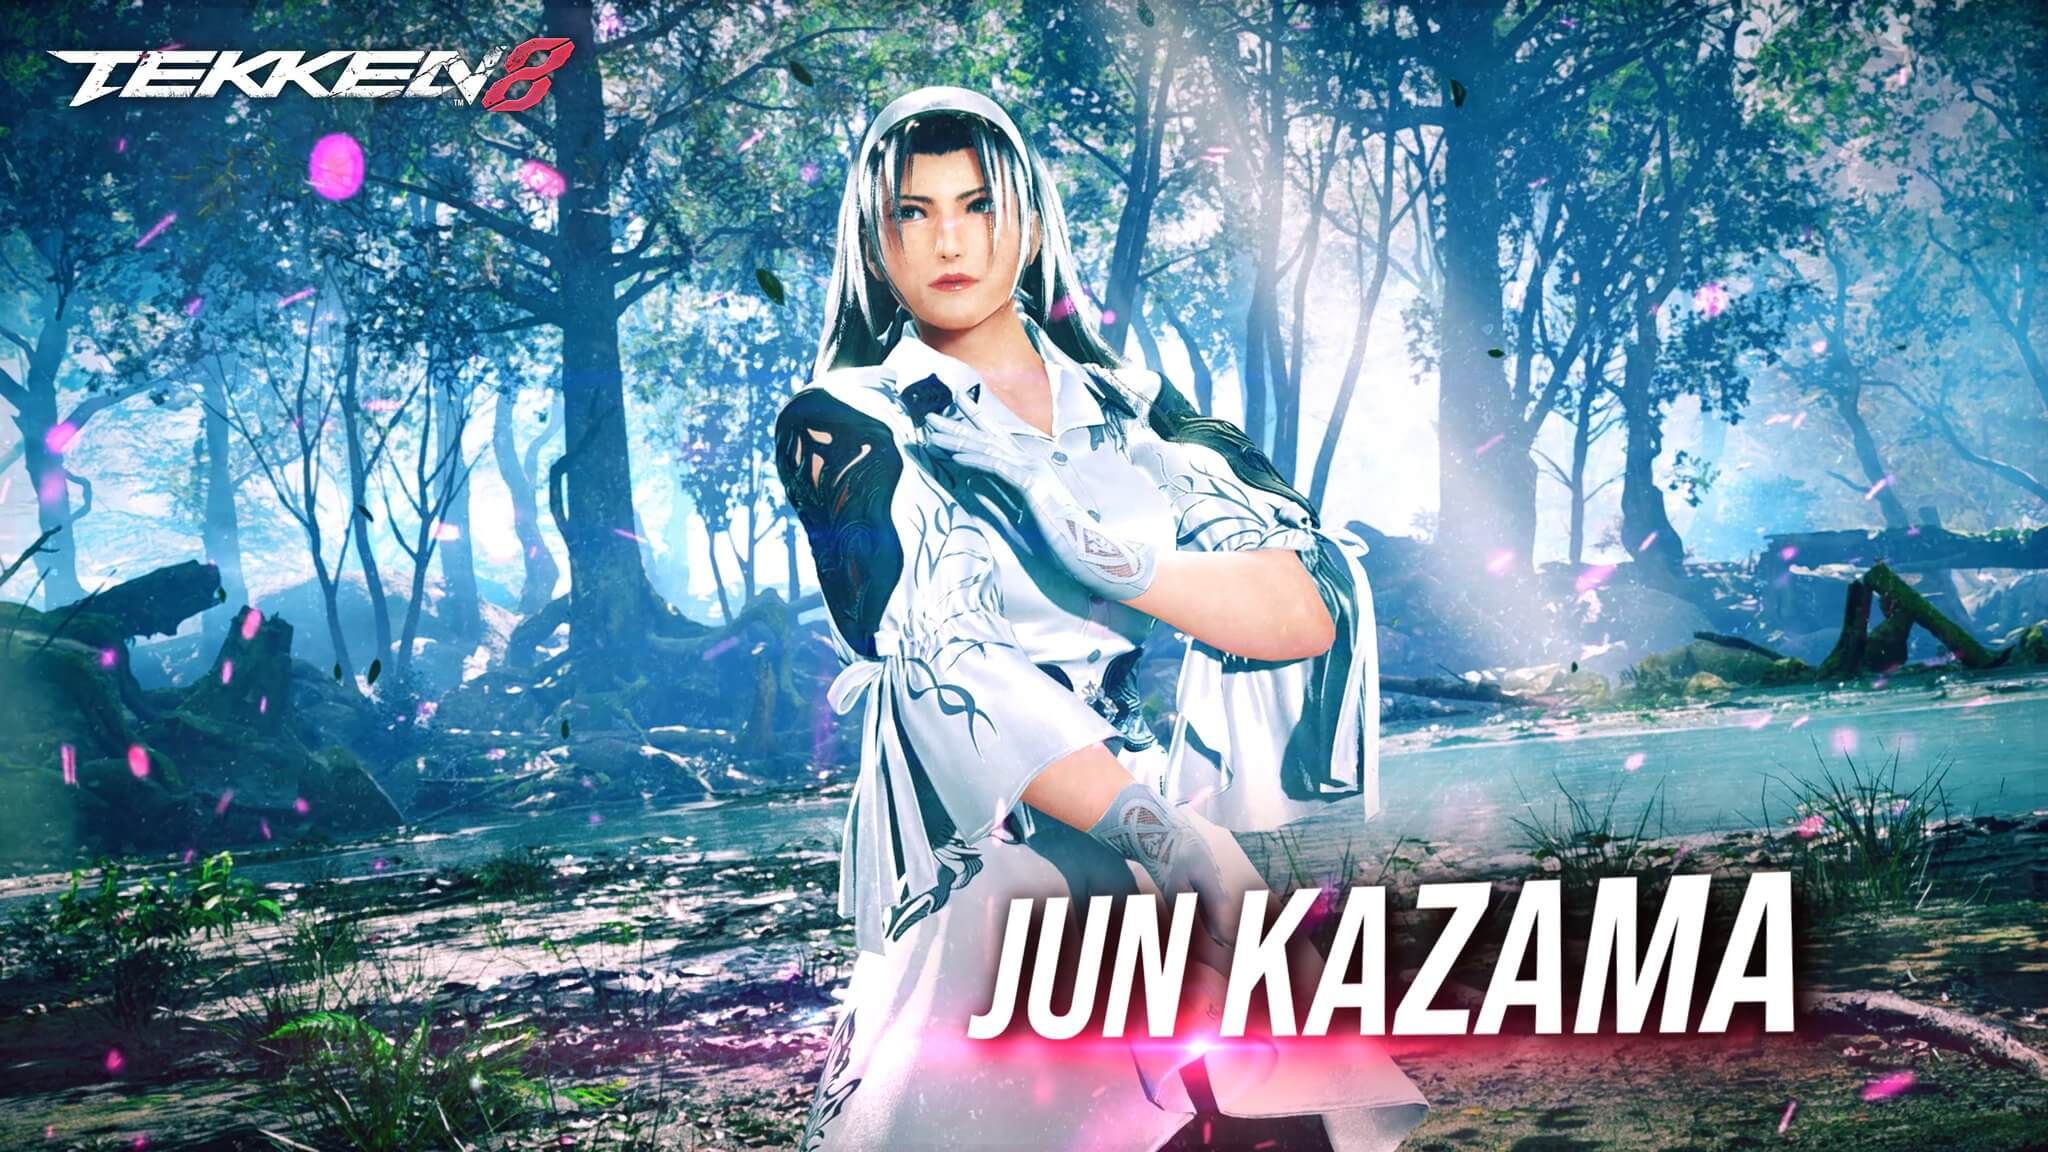 New Tekken 8 Trailer Introduces Jun Kazama in Action